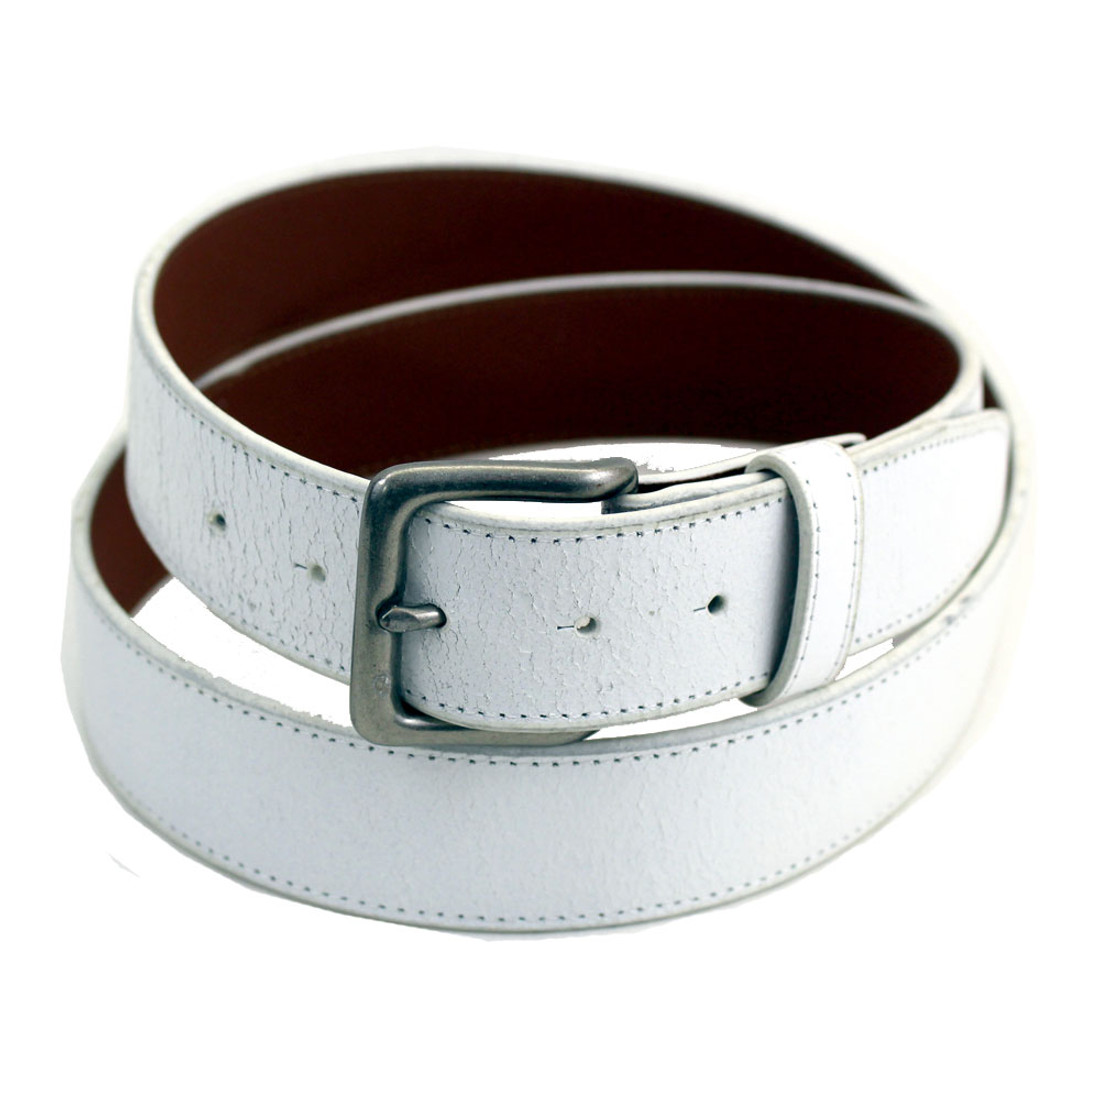 White leather belt.